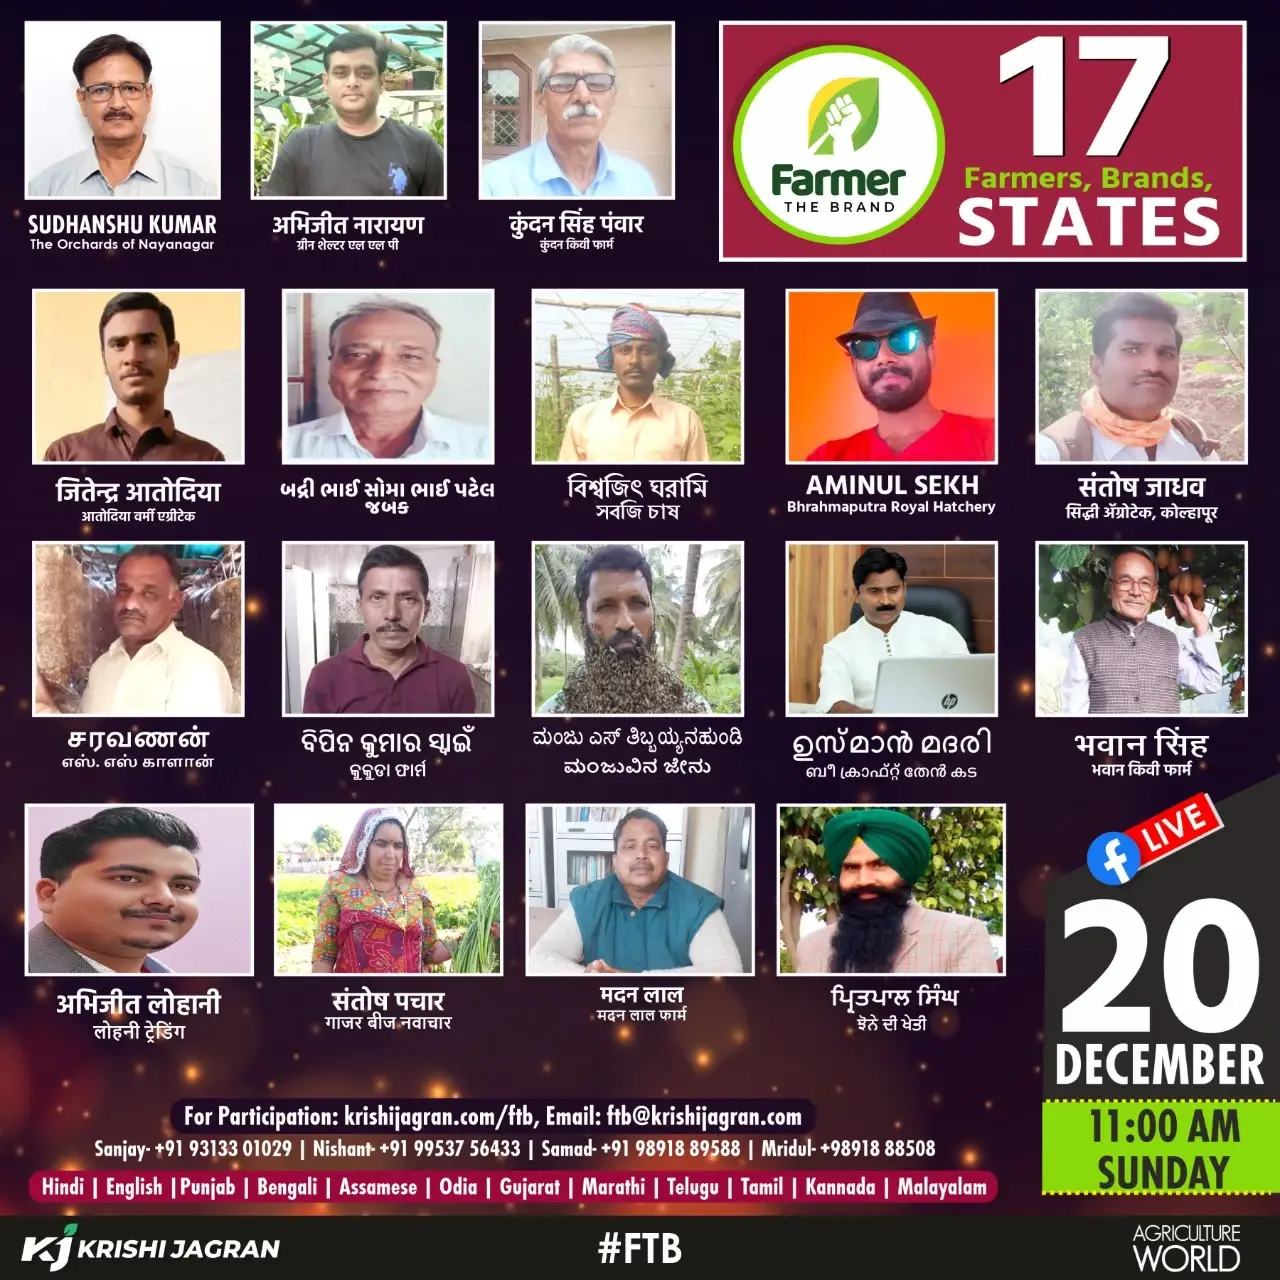 Meet Farmers from Seventeen States with Seventeen brands at Krishi Jagran FTB on December 20, 2020